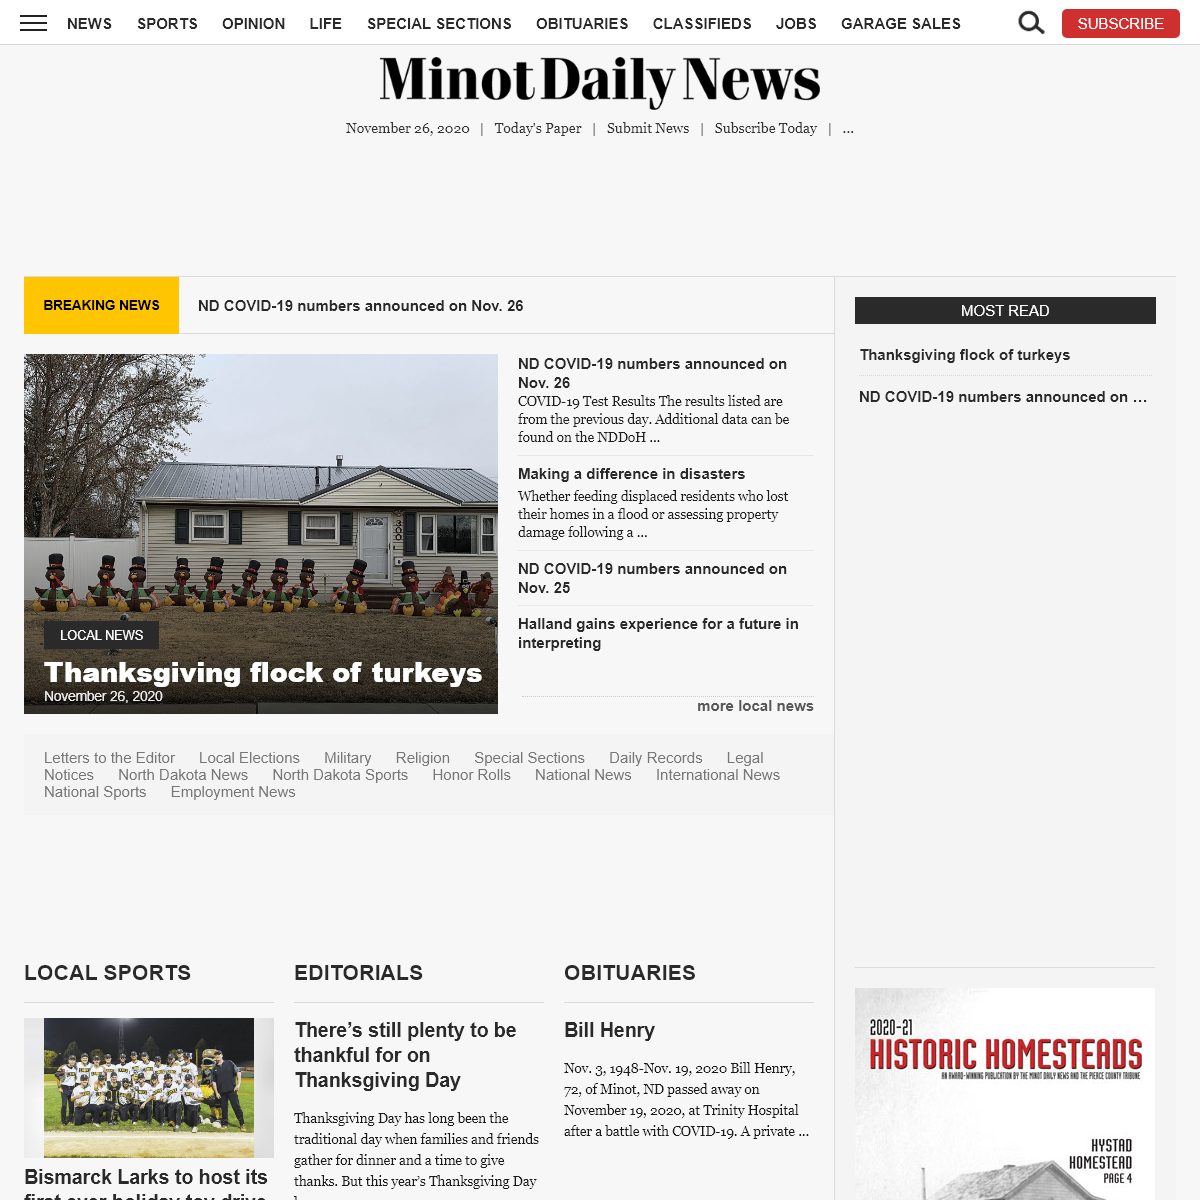 News, Sports, Jobs - Minot Daily News